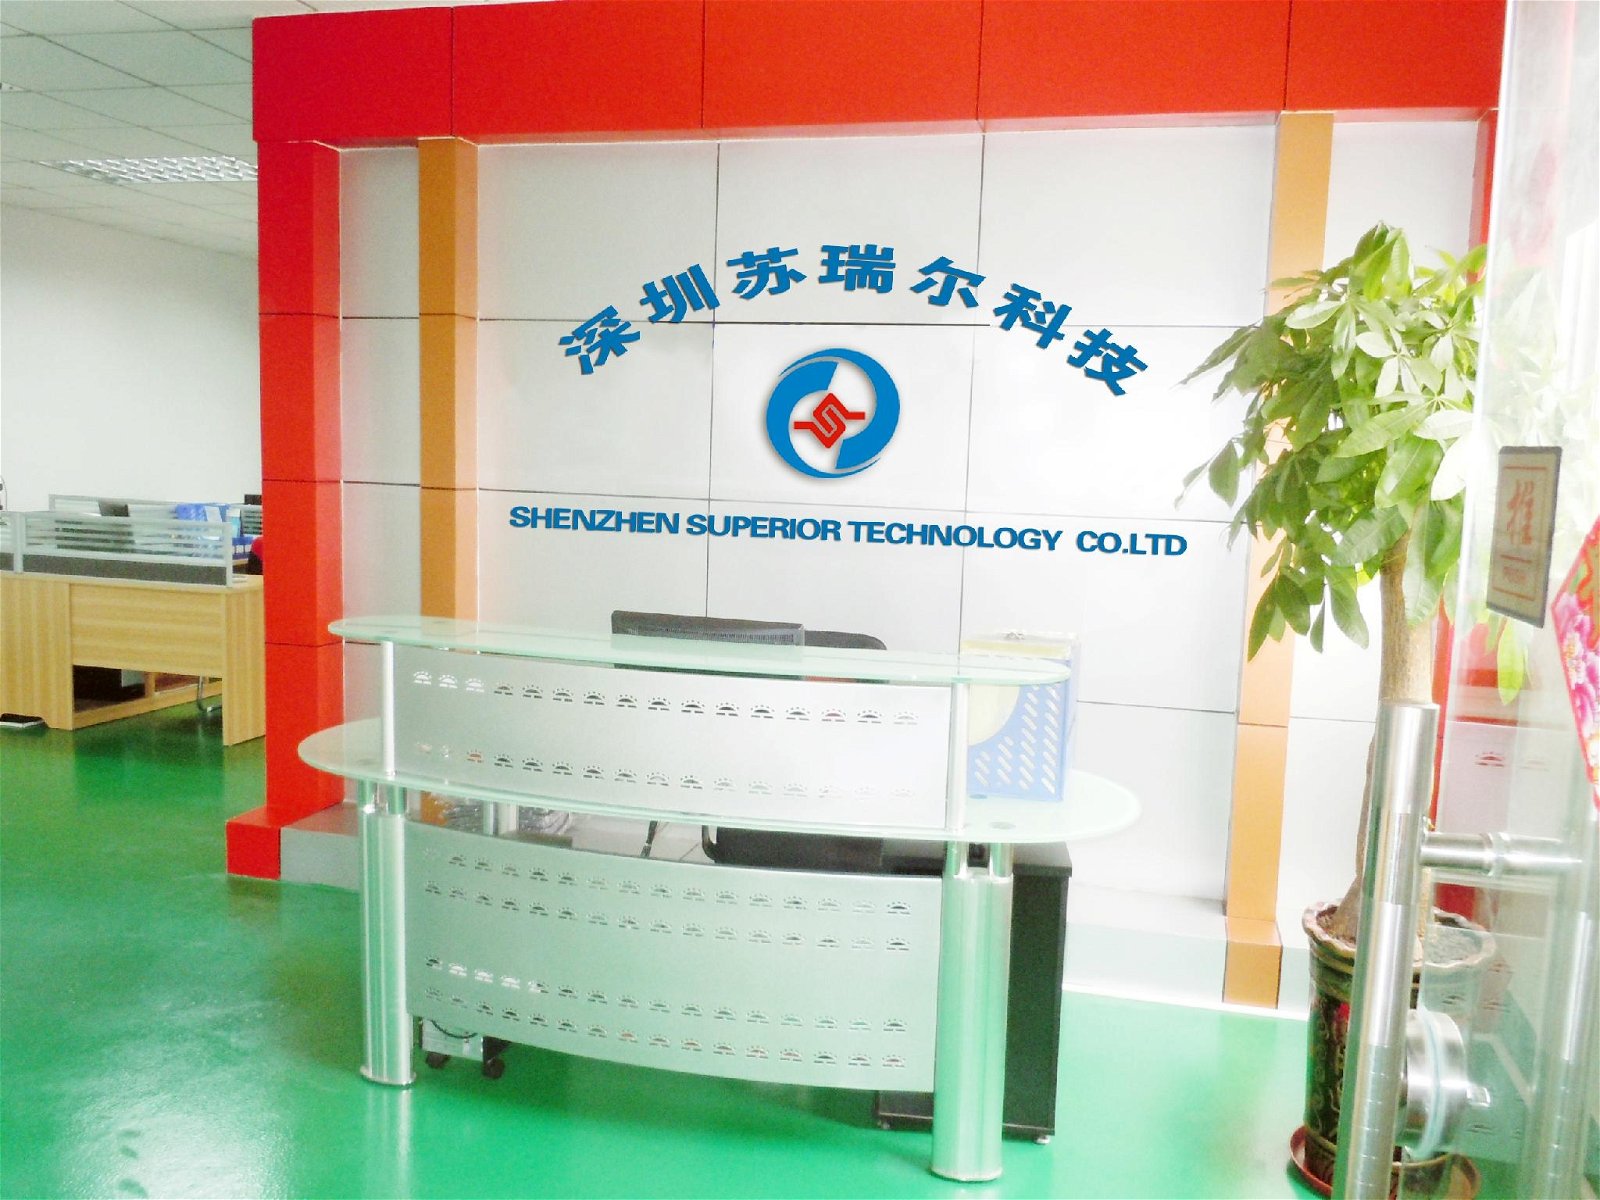 Control co ltd. Technology co., Ltd. Shenzhen Kaisheng Technology co. Ltd.. Shenzhen Laser co., Ltd., Китай. Шэньчжэнь Витстек Текнолоджи ко., Лтд.